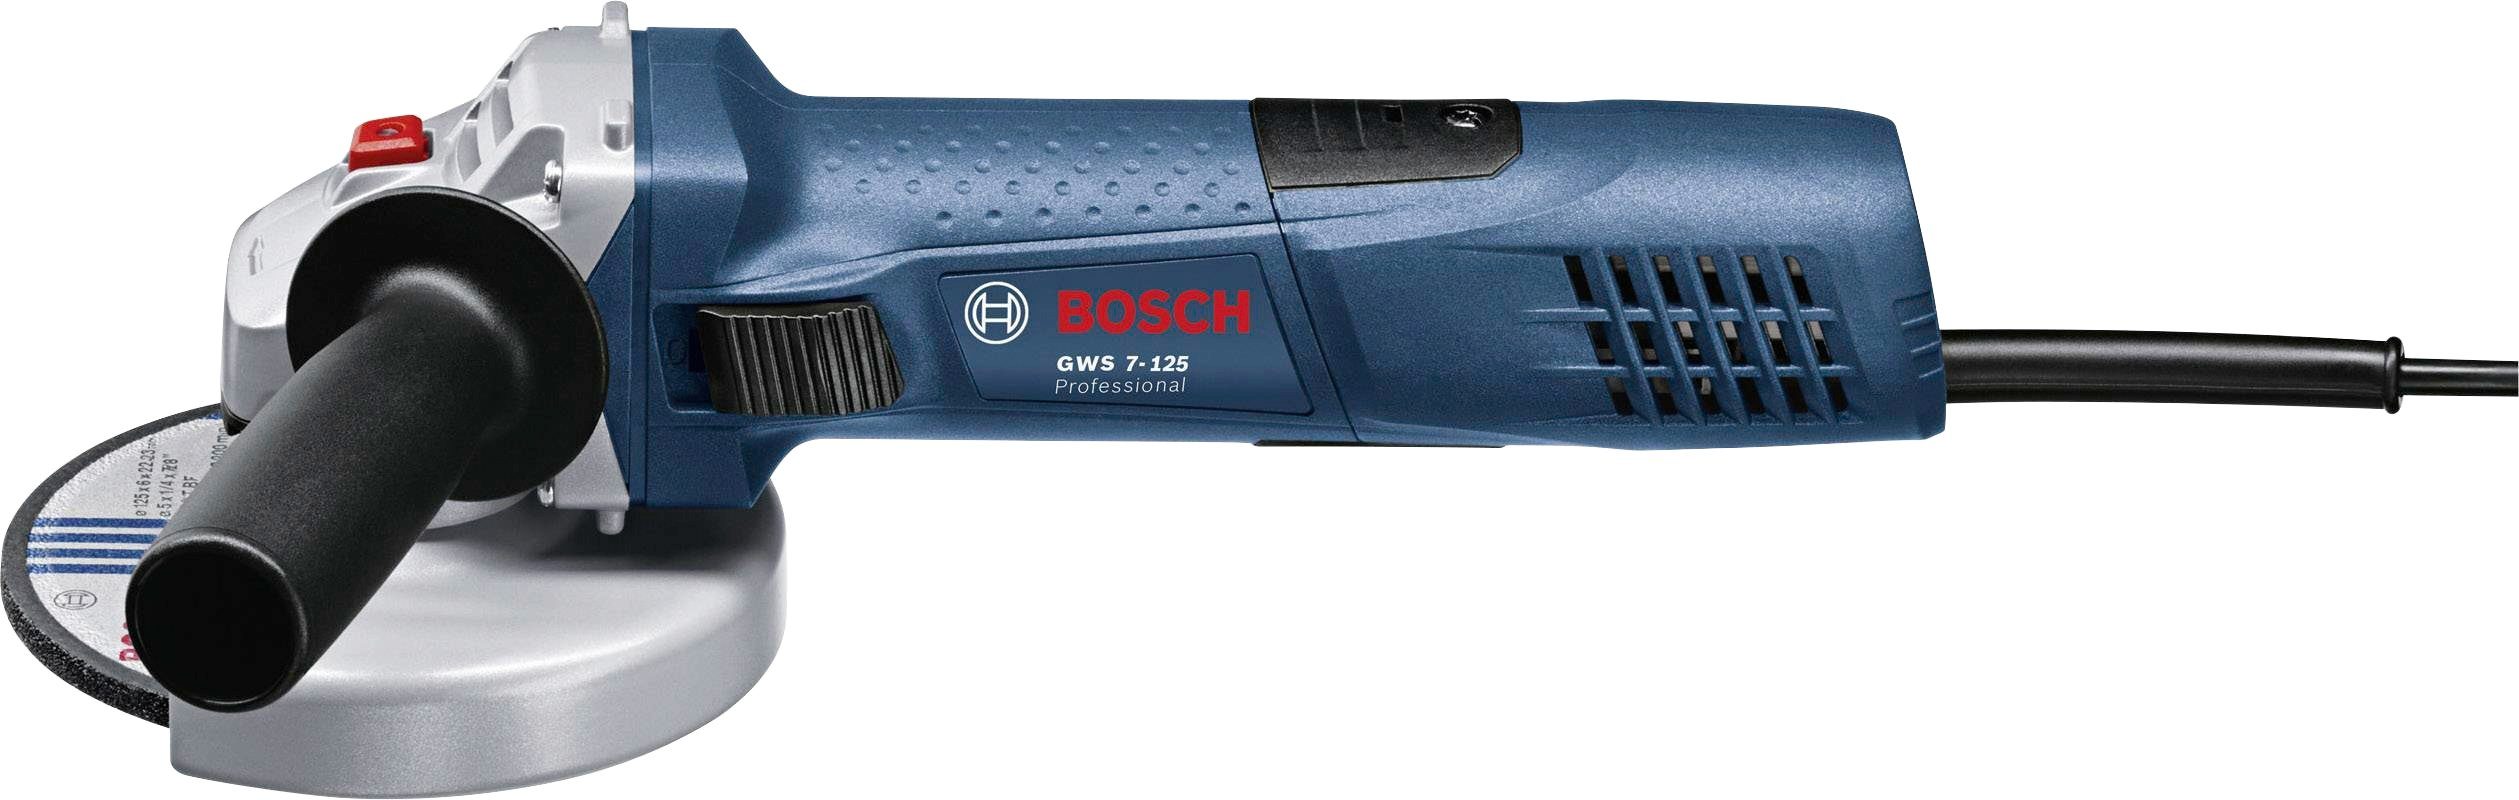 Bosch W Professional 7-125, GWS Winkelschleifer 720